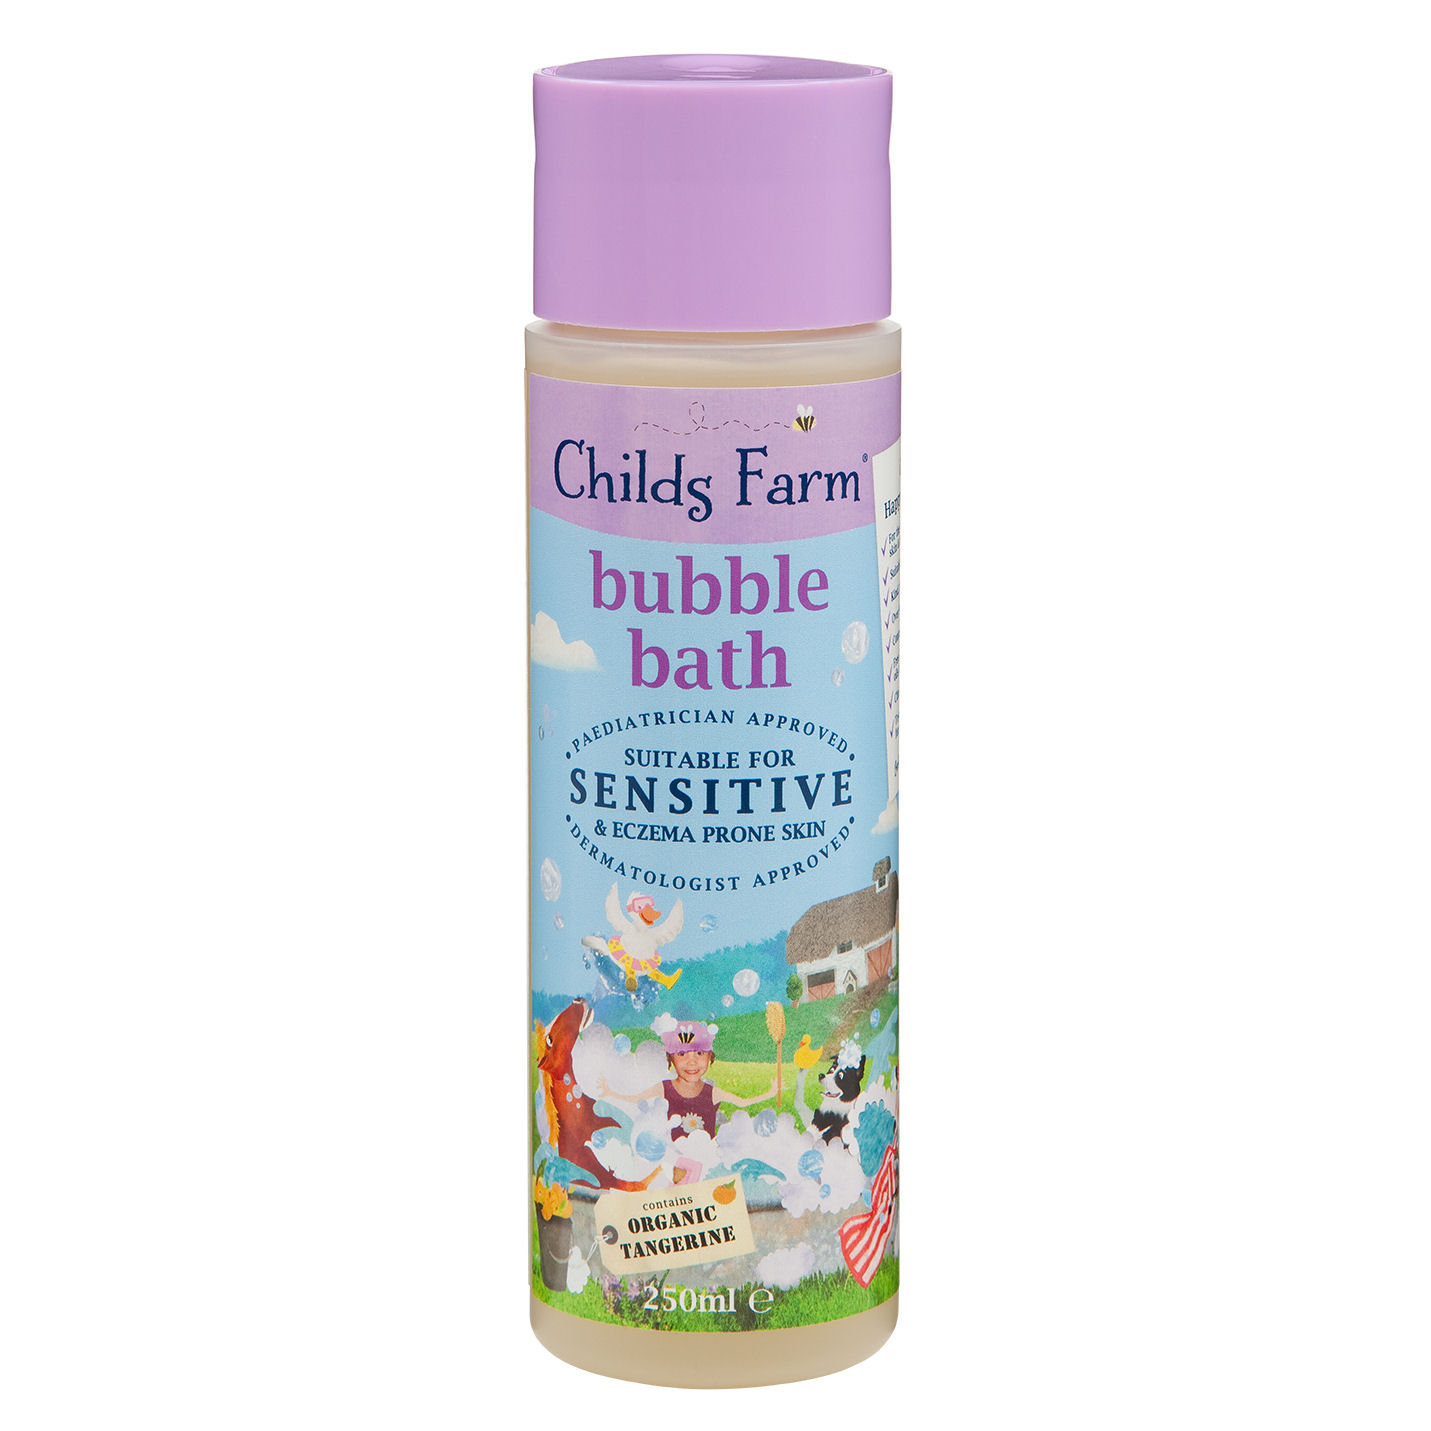 Childs Farm Bubble Bath for Sweet Dreams - 250ml